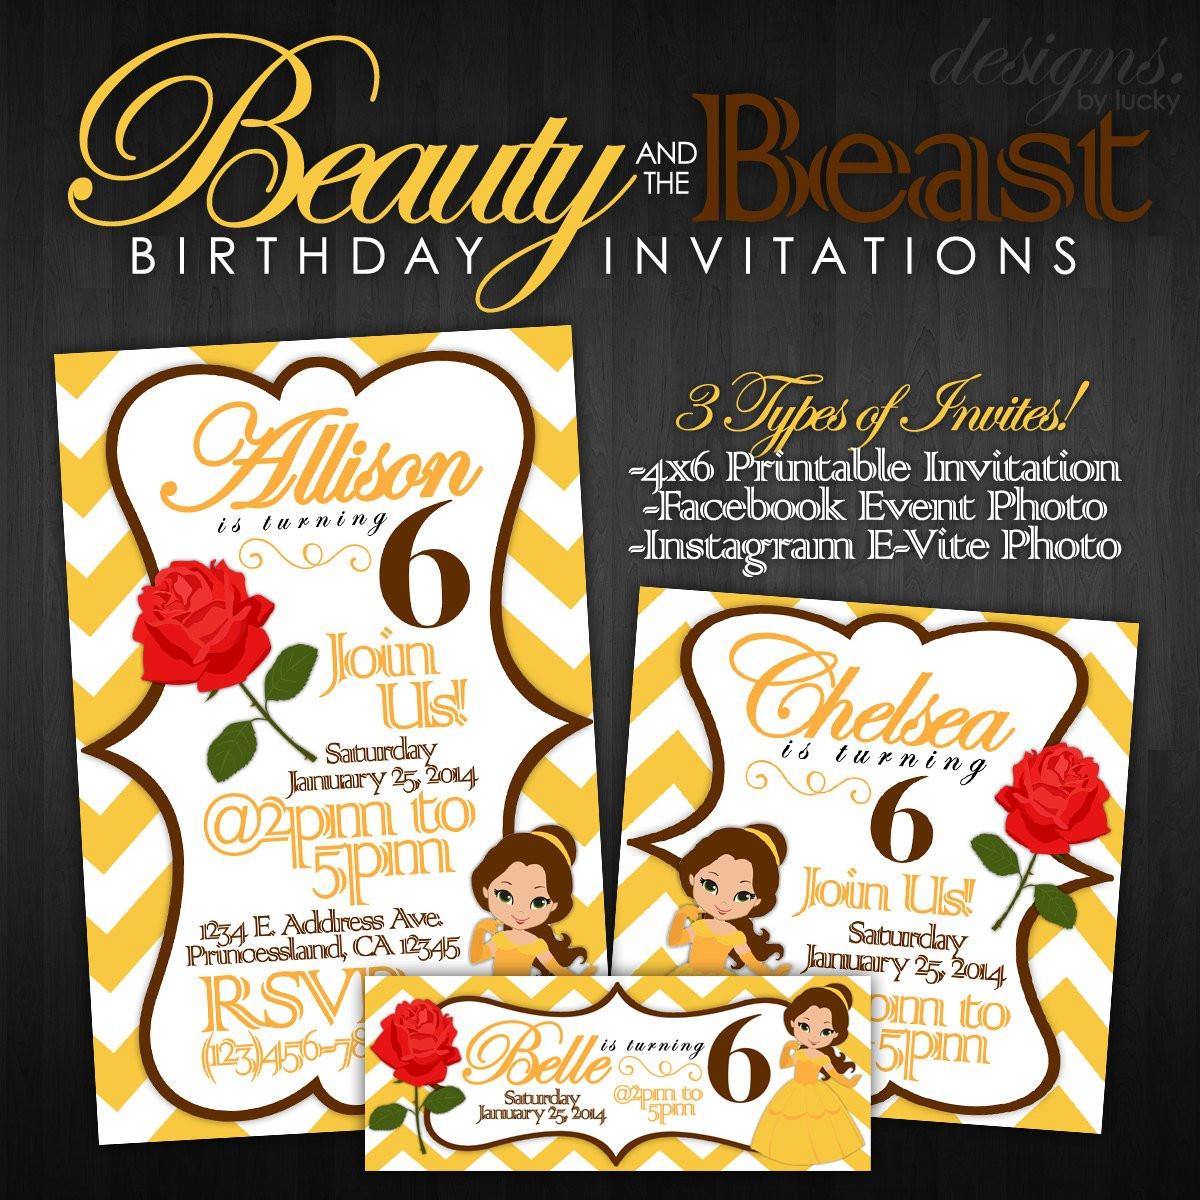 Beauty And The Beast Birthday Invitations
 Beauty and the Beast Birthday Invitations by DesignsByLucky